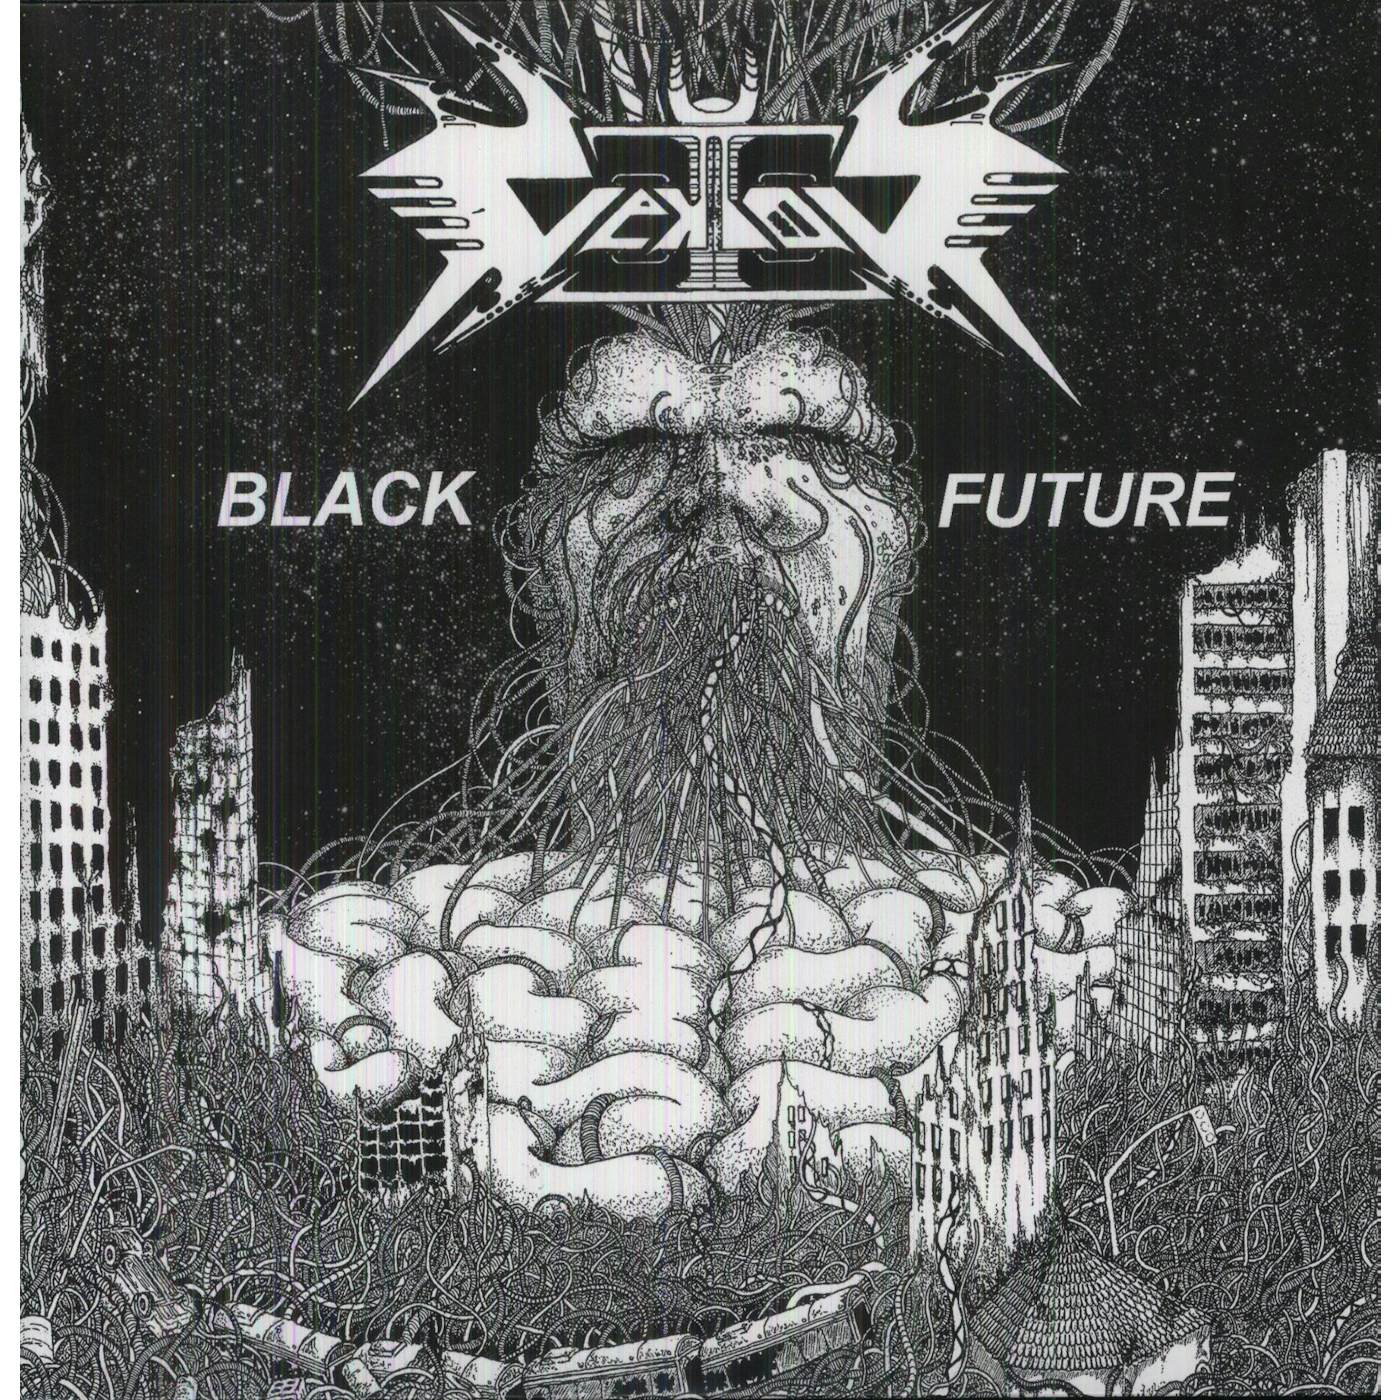 Vektor Black Future Vinyl Record